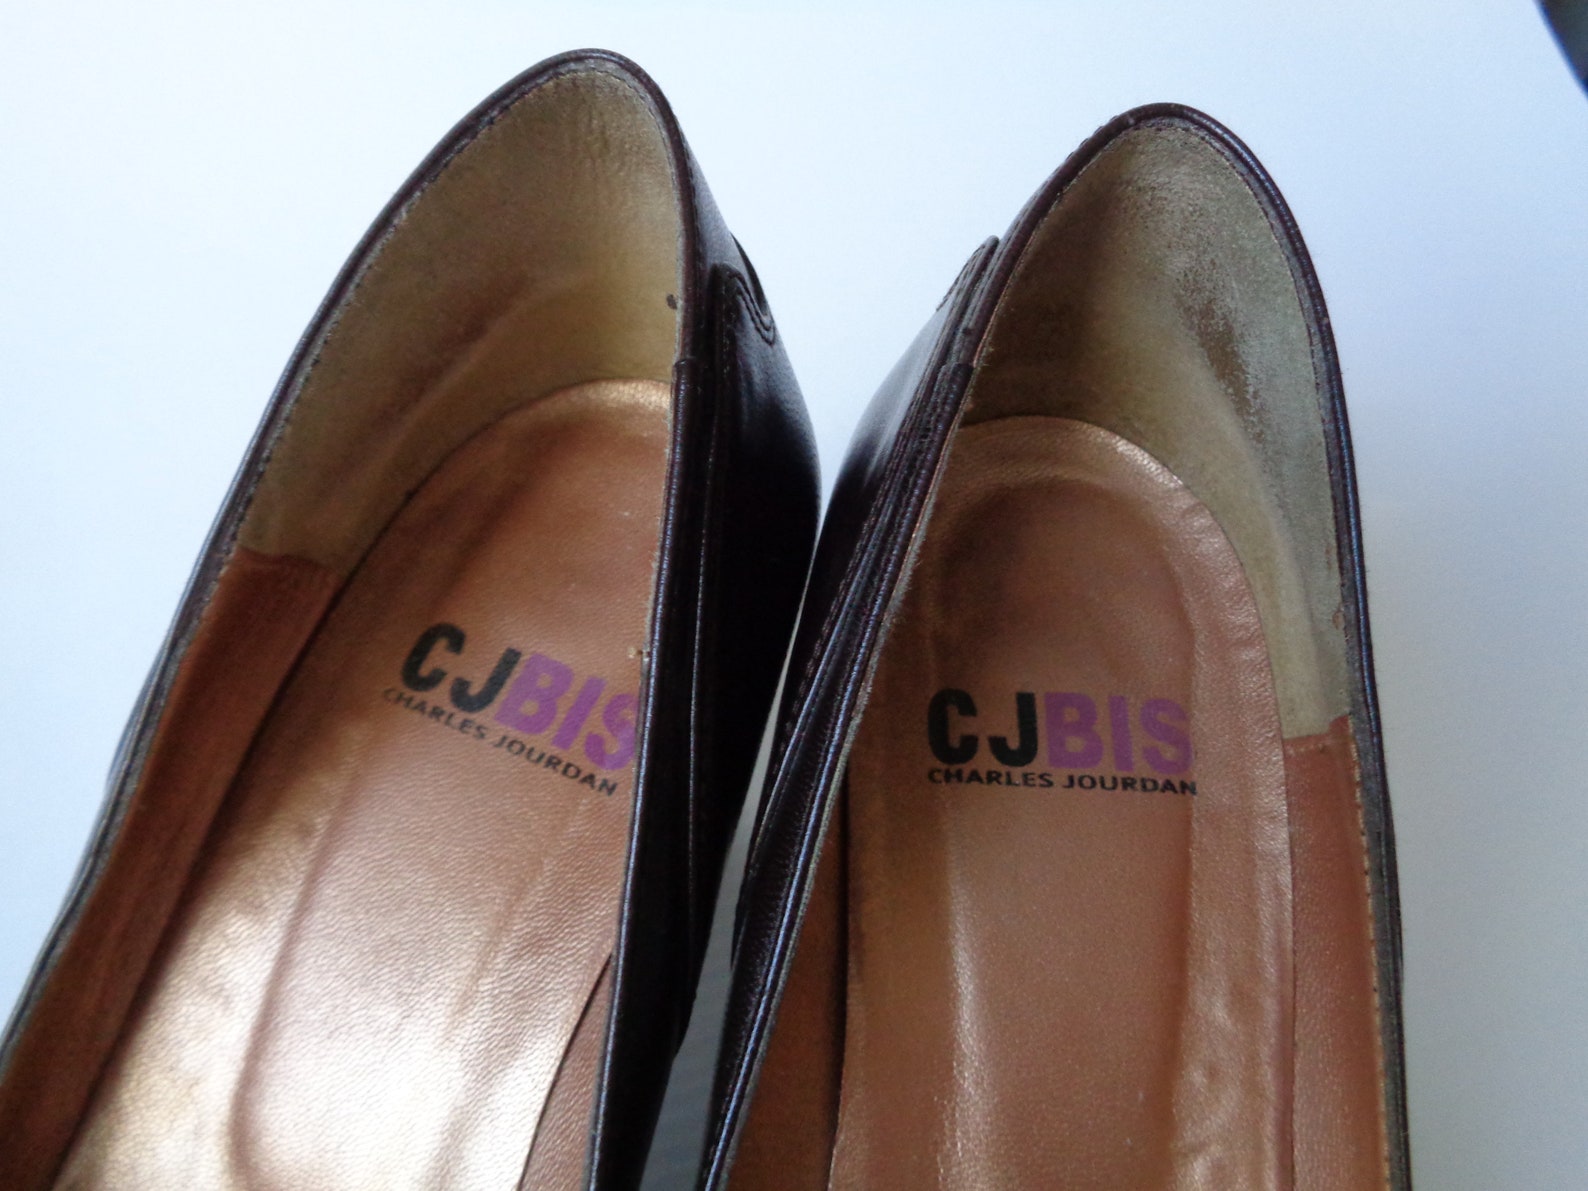 Charles Jourdan CJBIS Shoes Vintage All Leather Shoes Dark | Etsy